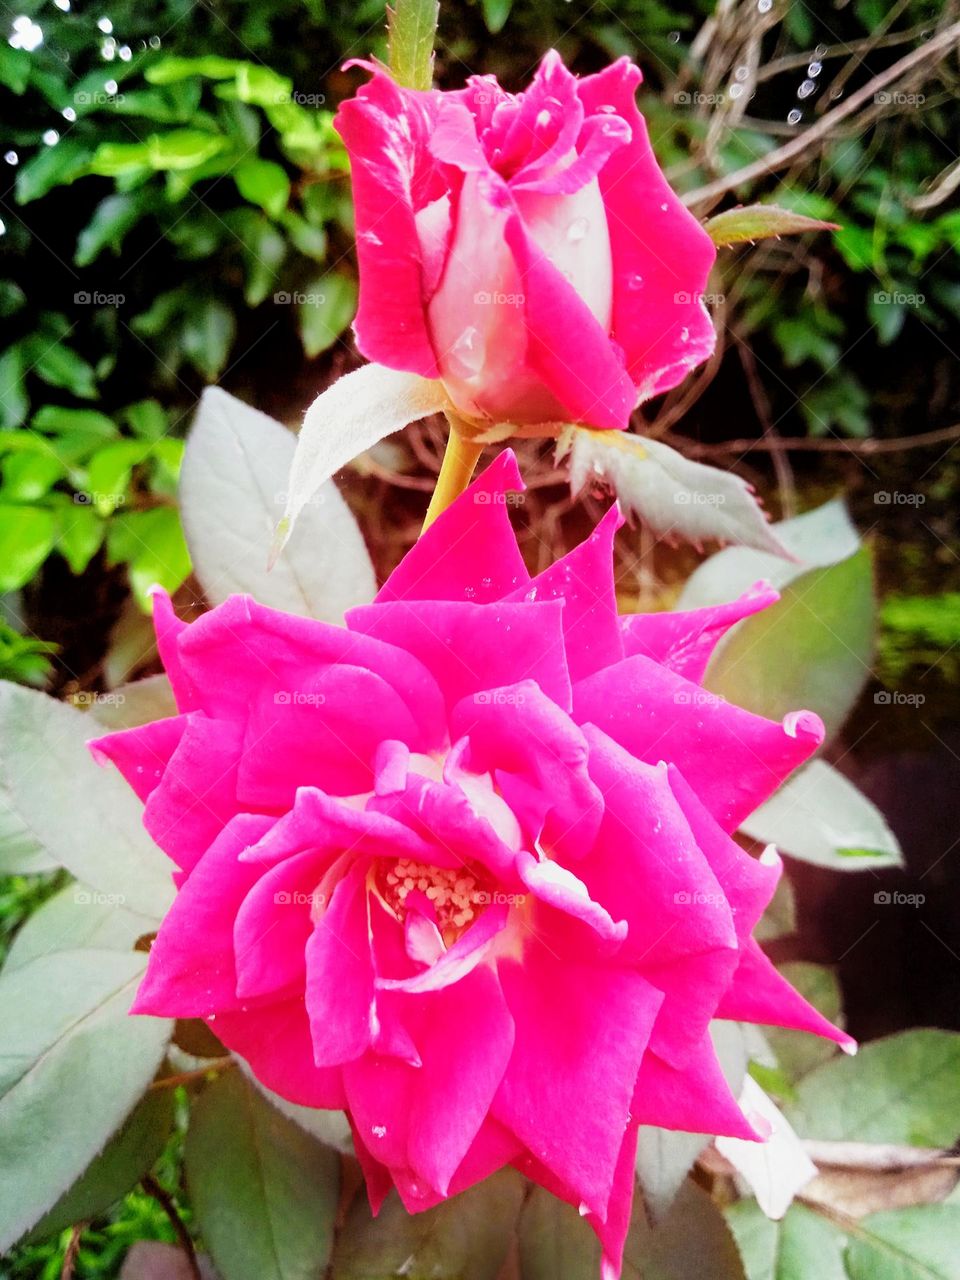 Magenta Rose flower